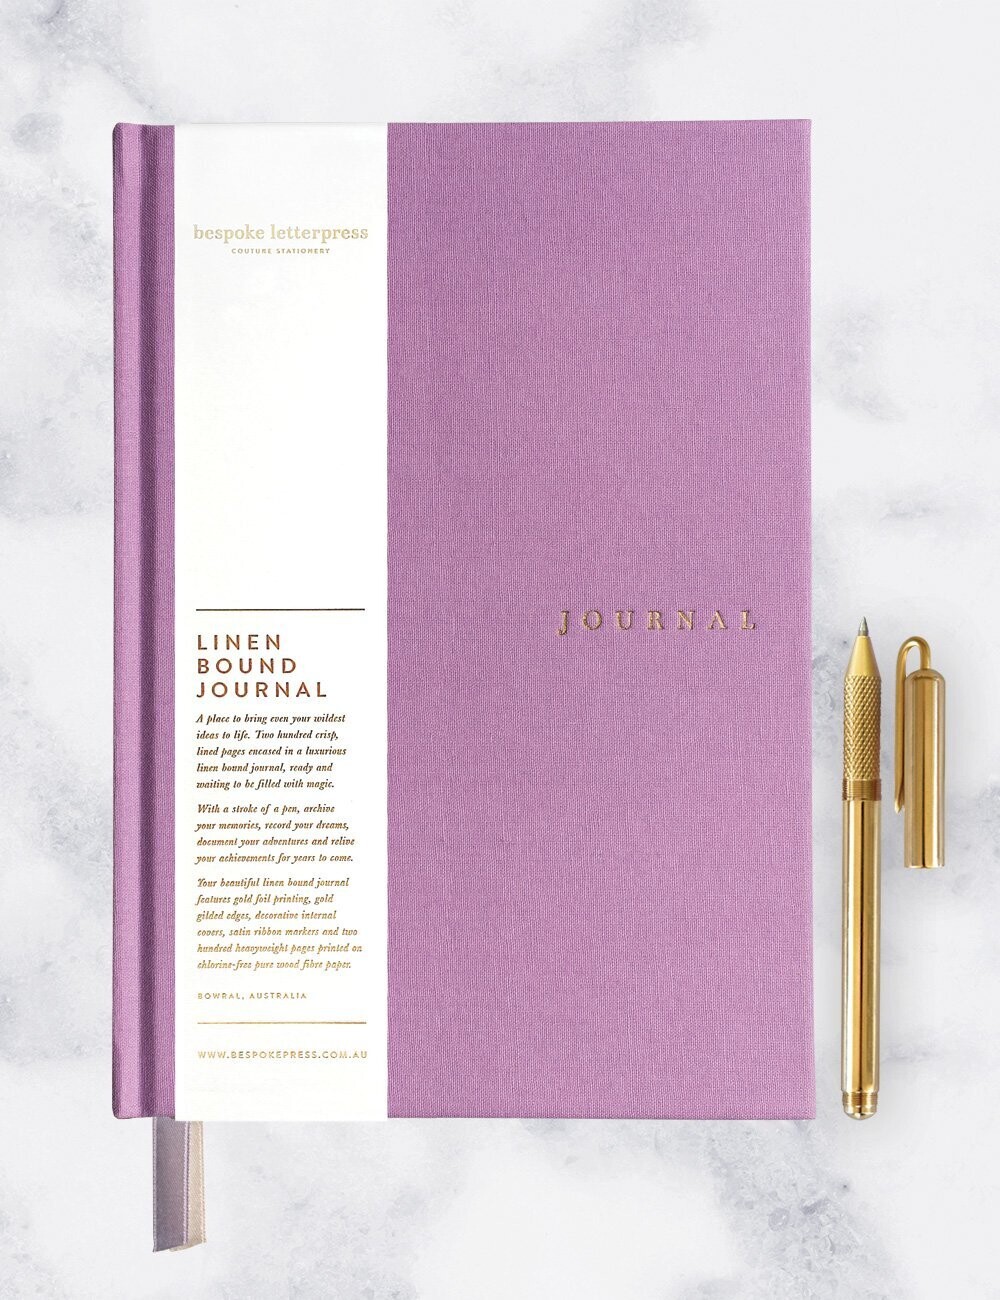 Linen Bound Journal By Bespoke Letterpress